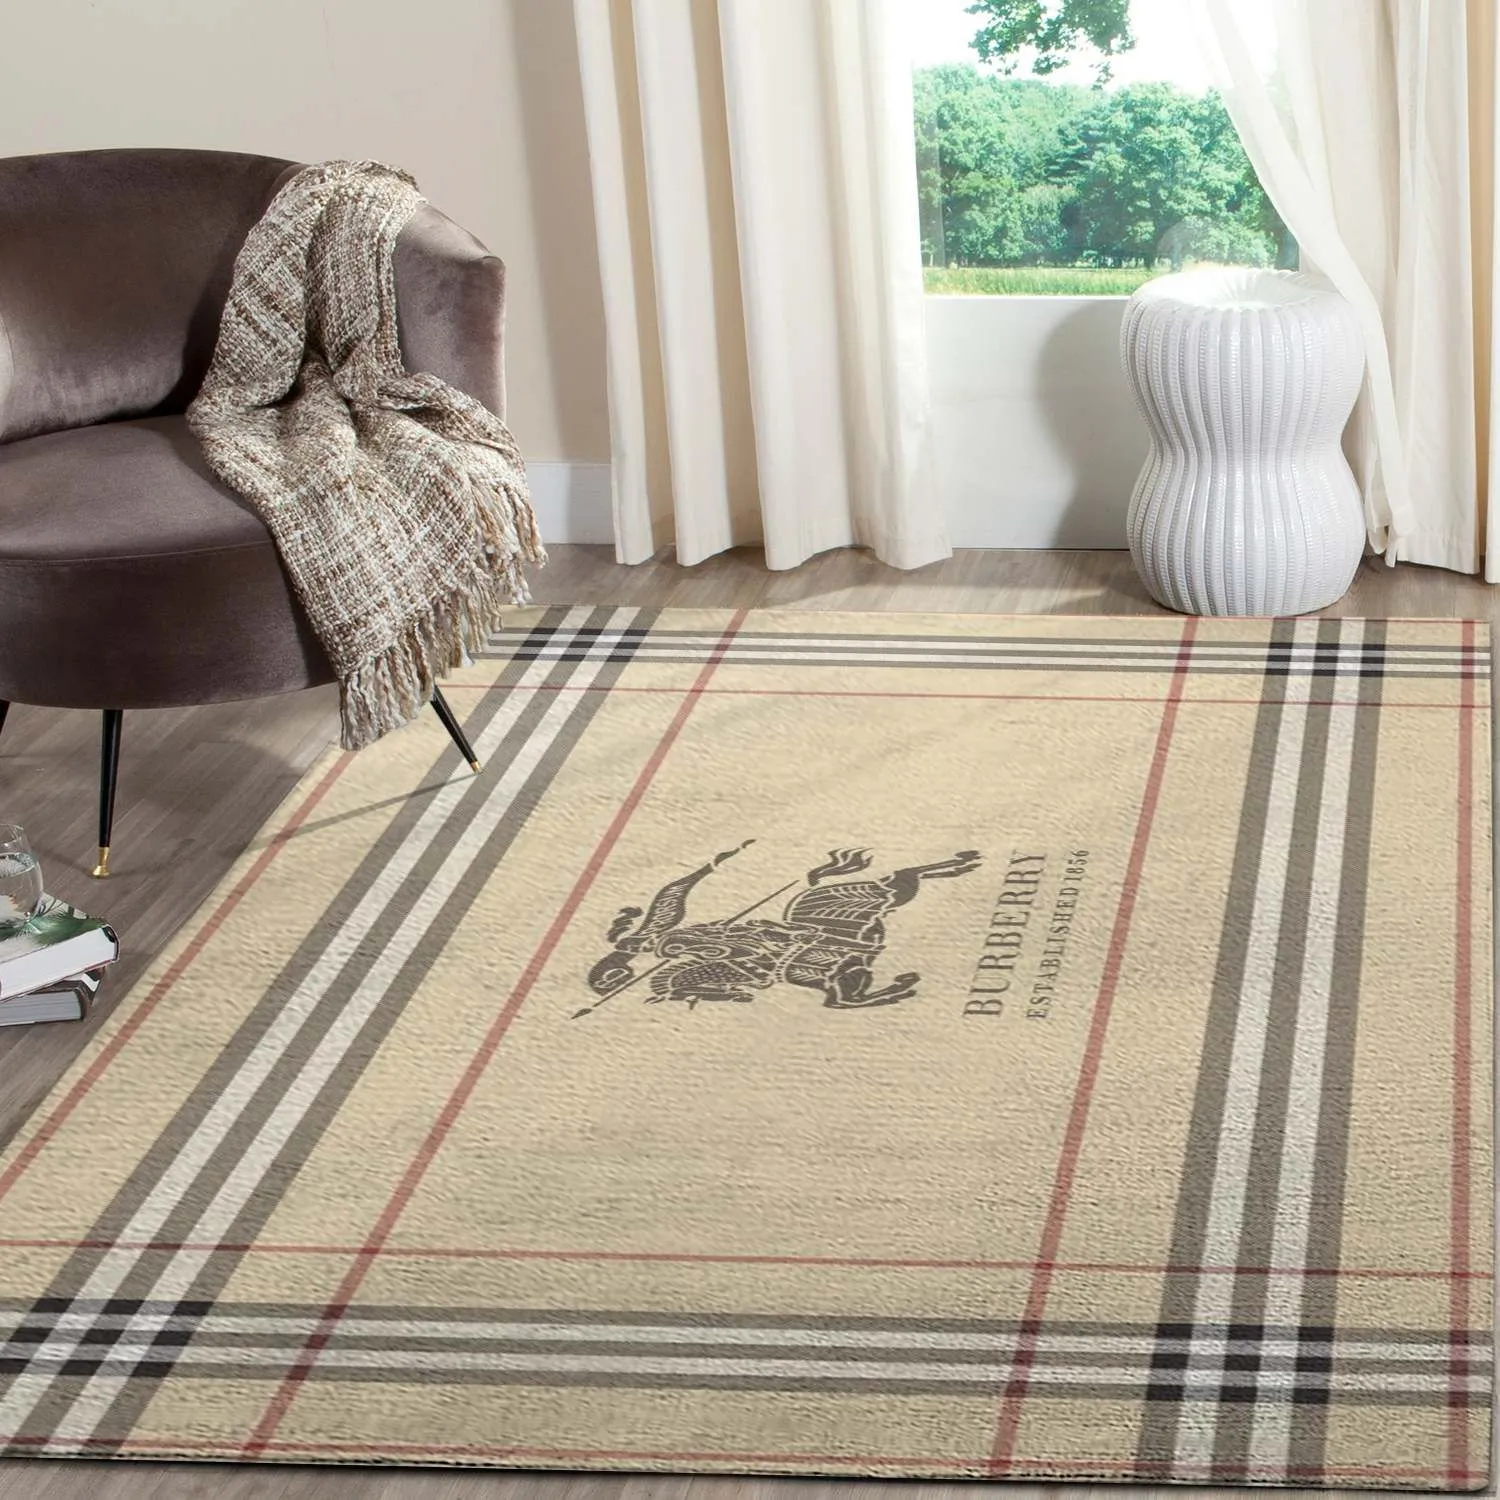 Burberry Rectangle Rug Luxury Home Decor Fashion Brand Door Mat Area Carpet